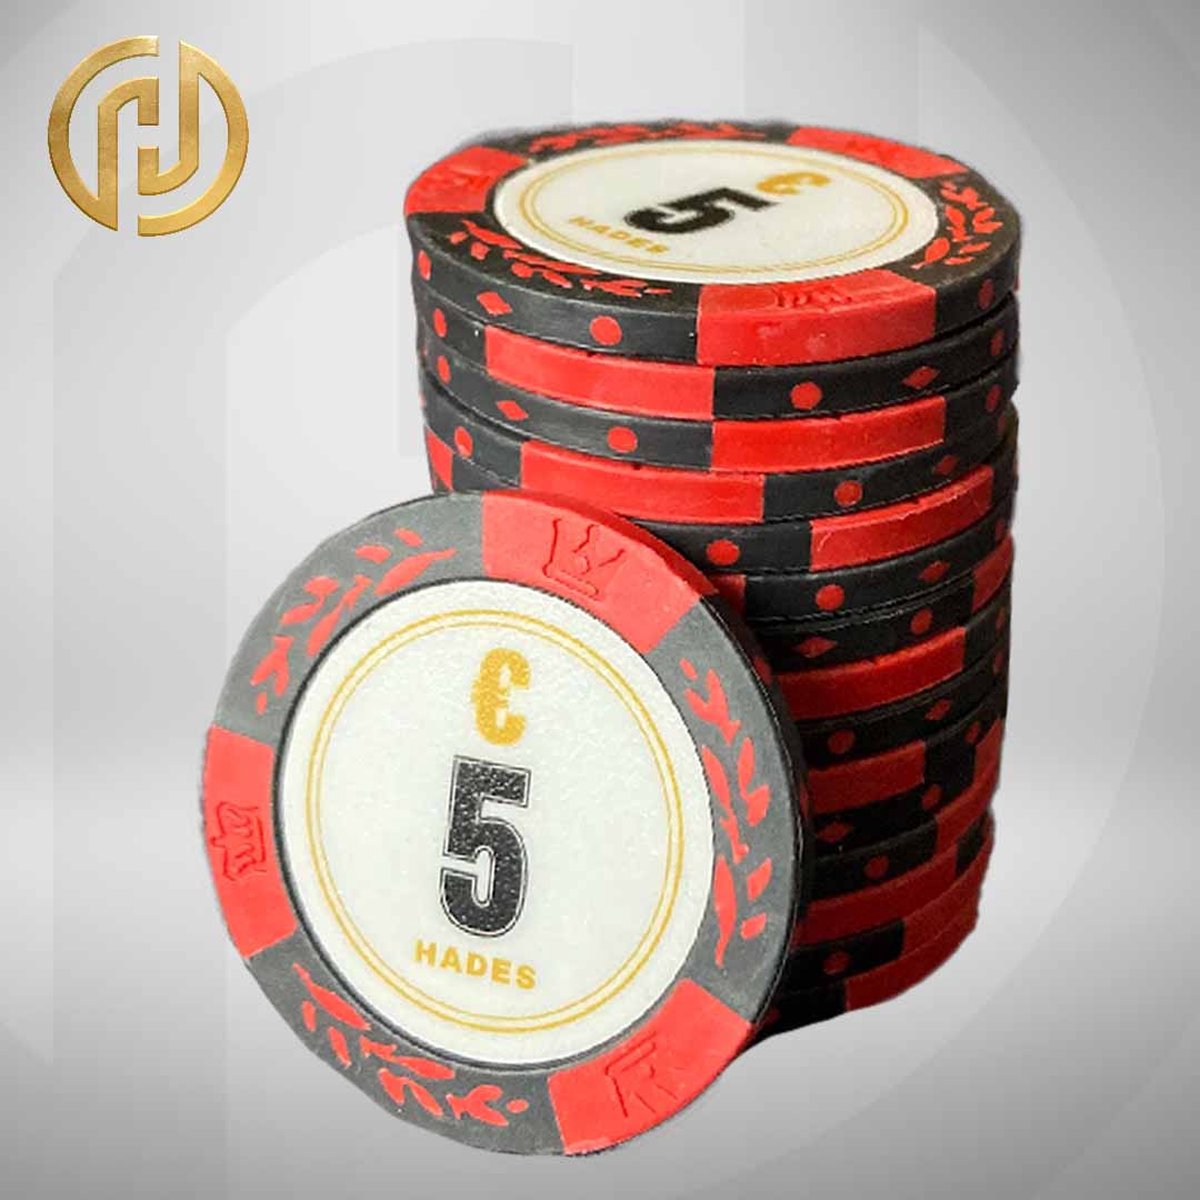 Mec Hades Cashgame Classic Poker Chips €5 rood (25 stuks) pokerchips pokerfiches poker fiches clay chips pokerspel pokerset poker set